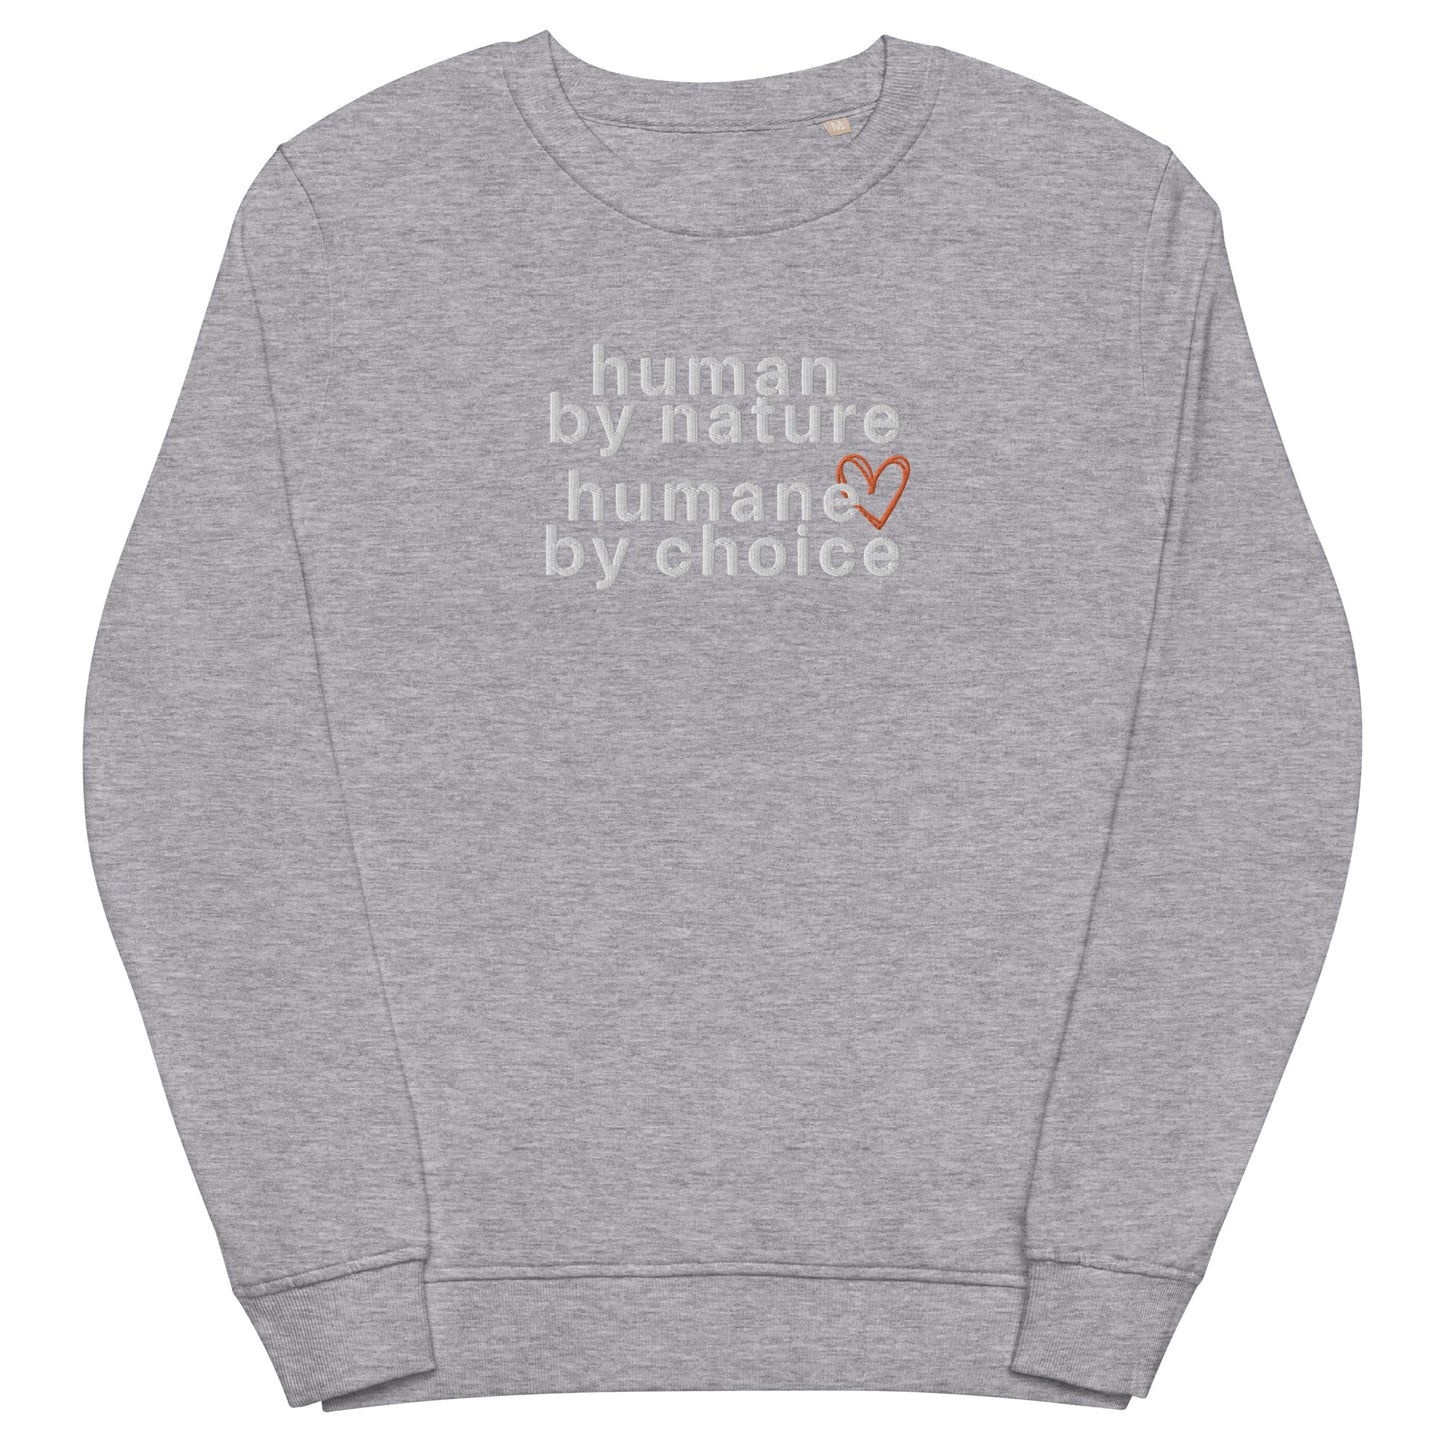 Humane By Choice Organic Sweatshirt